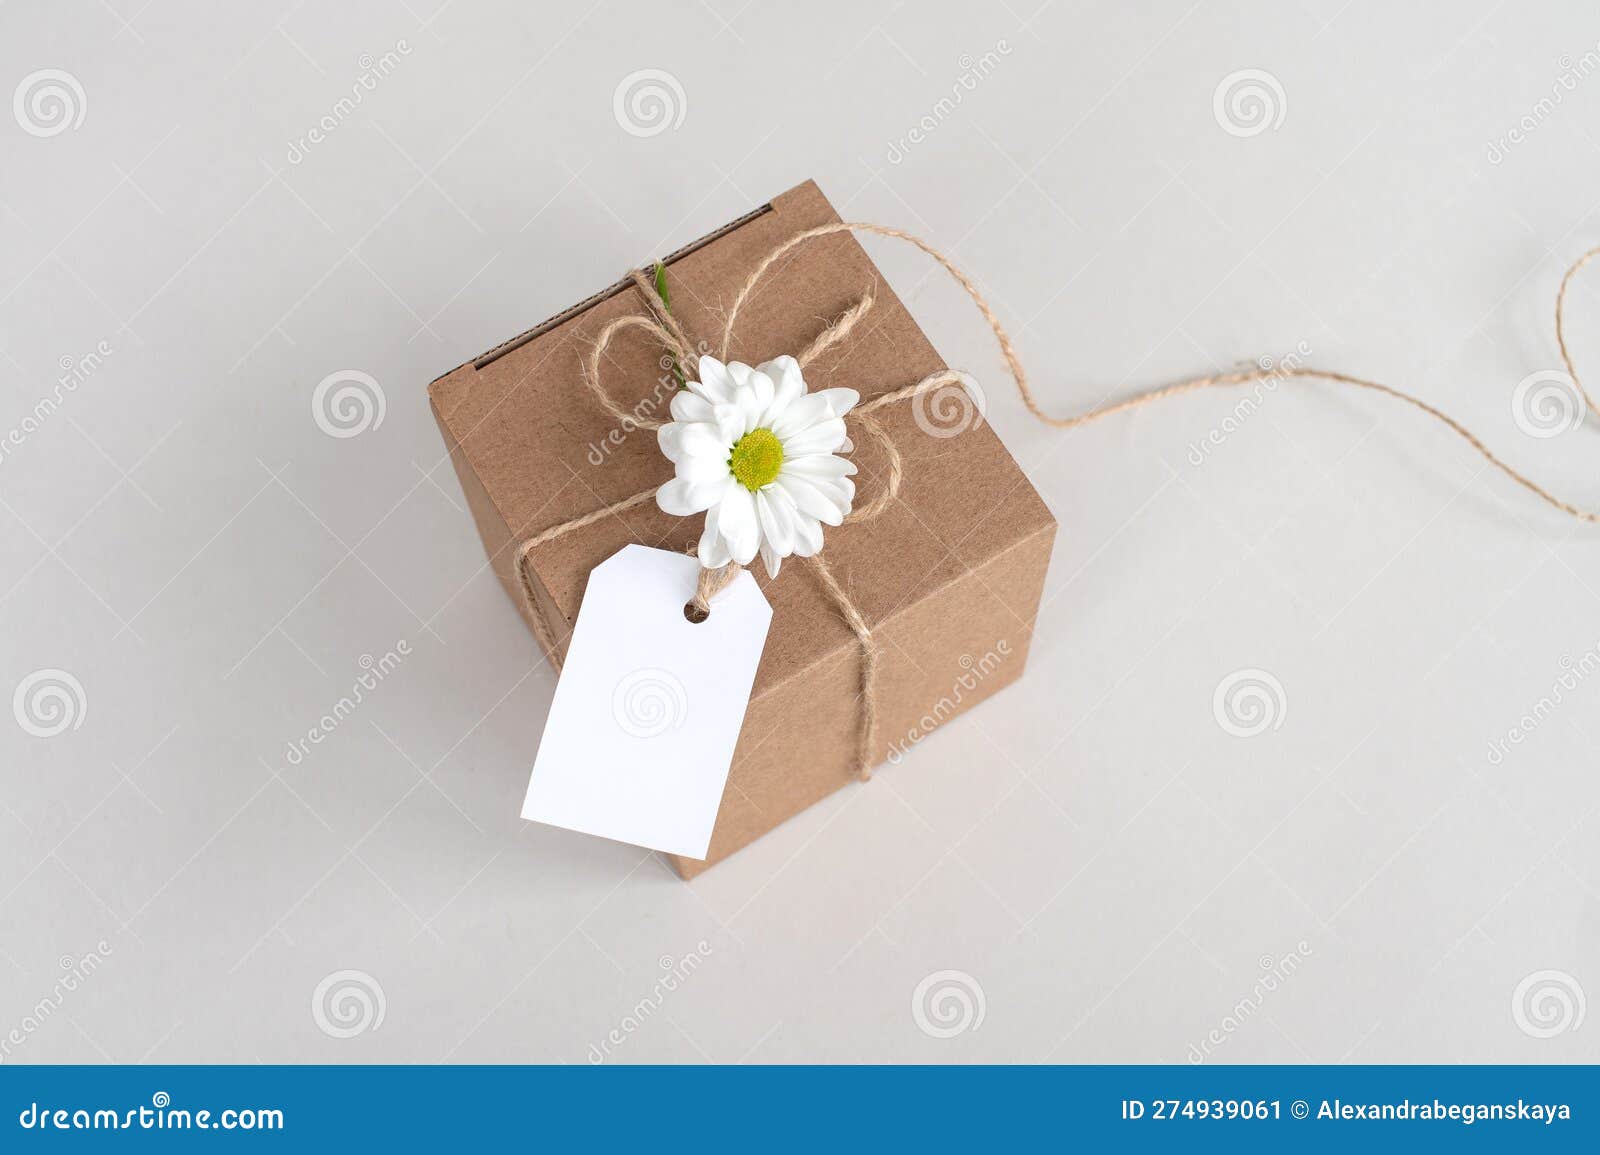 https://thumbs.dreamstime.com/z/kraft-box-blank-label-price-tag-tag-mockup-white-cardboard-label-rope-cord-isolated-kraft-box-empty-label-price-tag-274939061.jpg